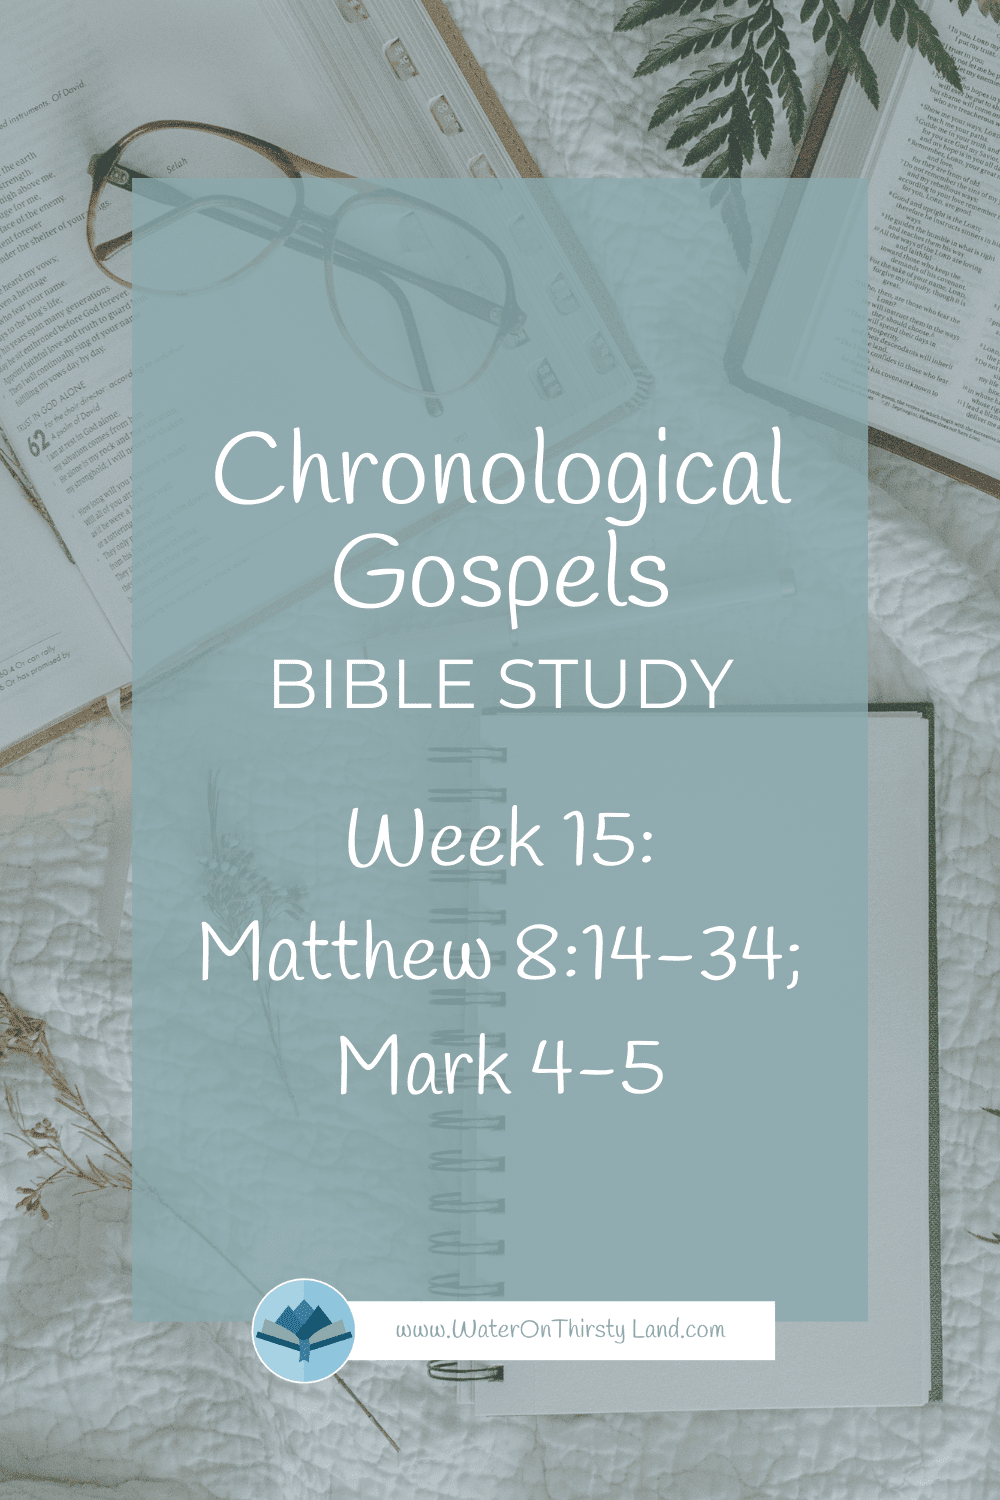 Chronological Gospels Week 15 Matthew 8:14-34; Mark 4-5